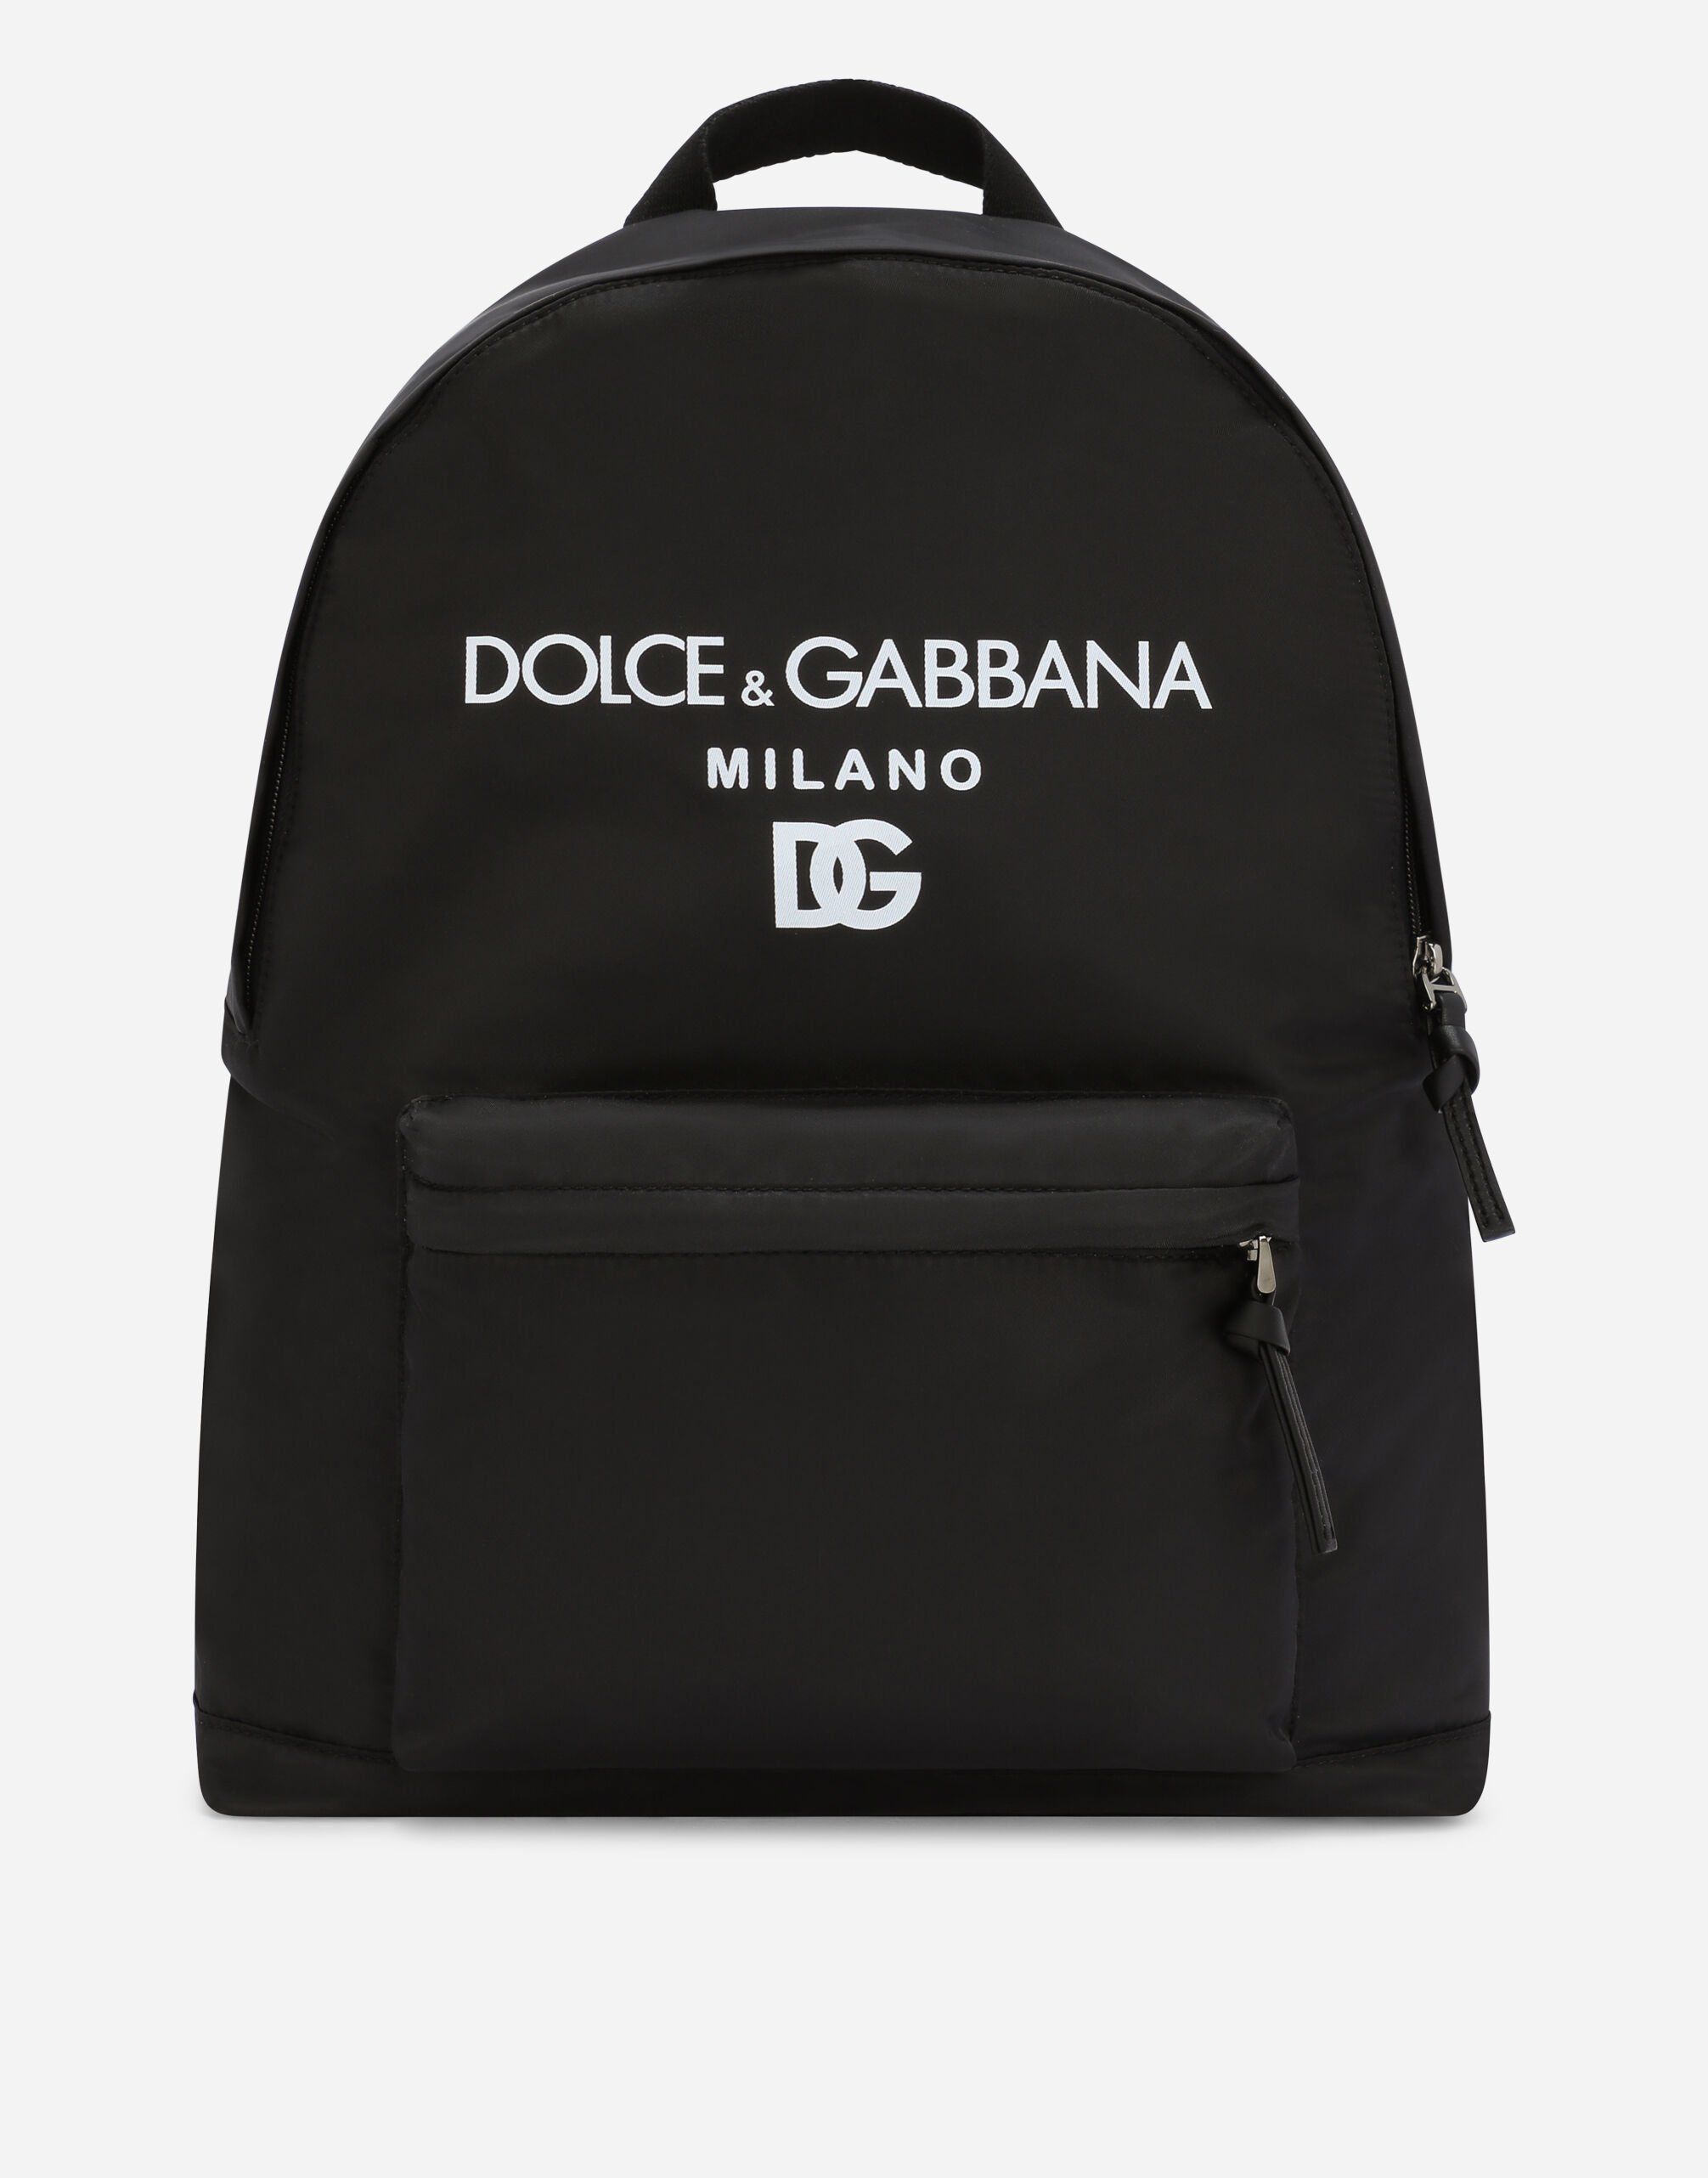 Dolce & Gabbana Sac à dos en nylon imprimé Dolce&Gabbana Milano Noir EB0003AB000